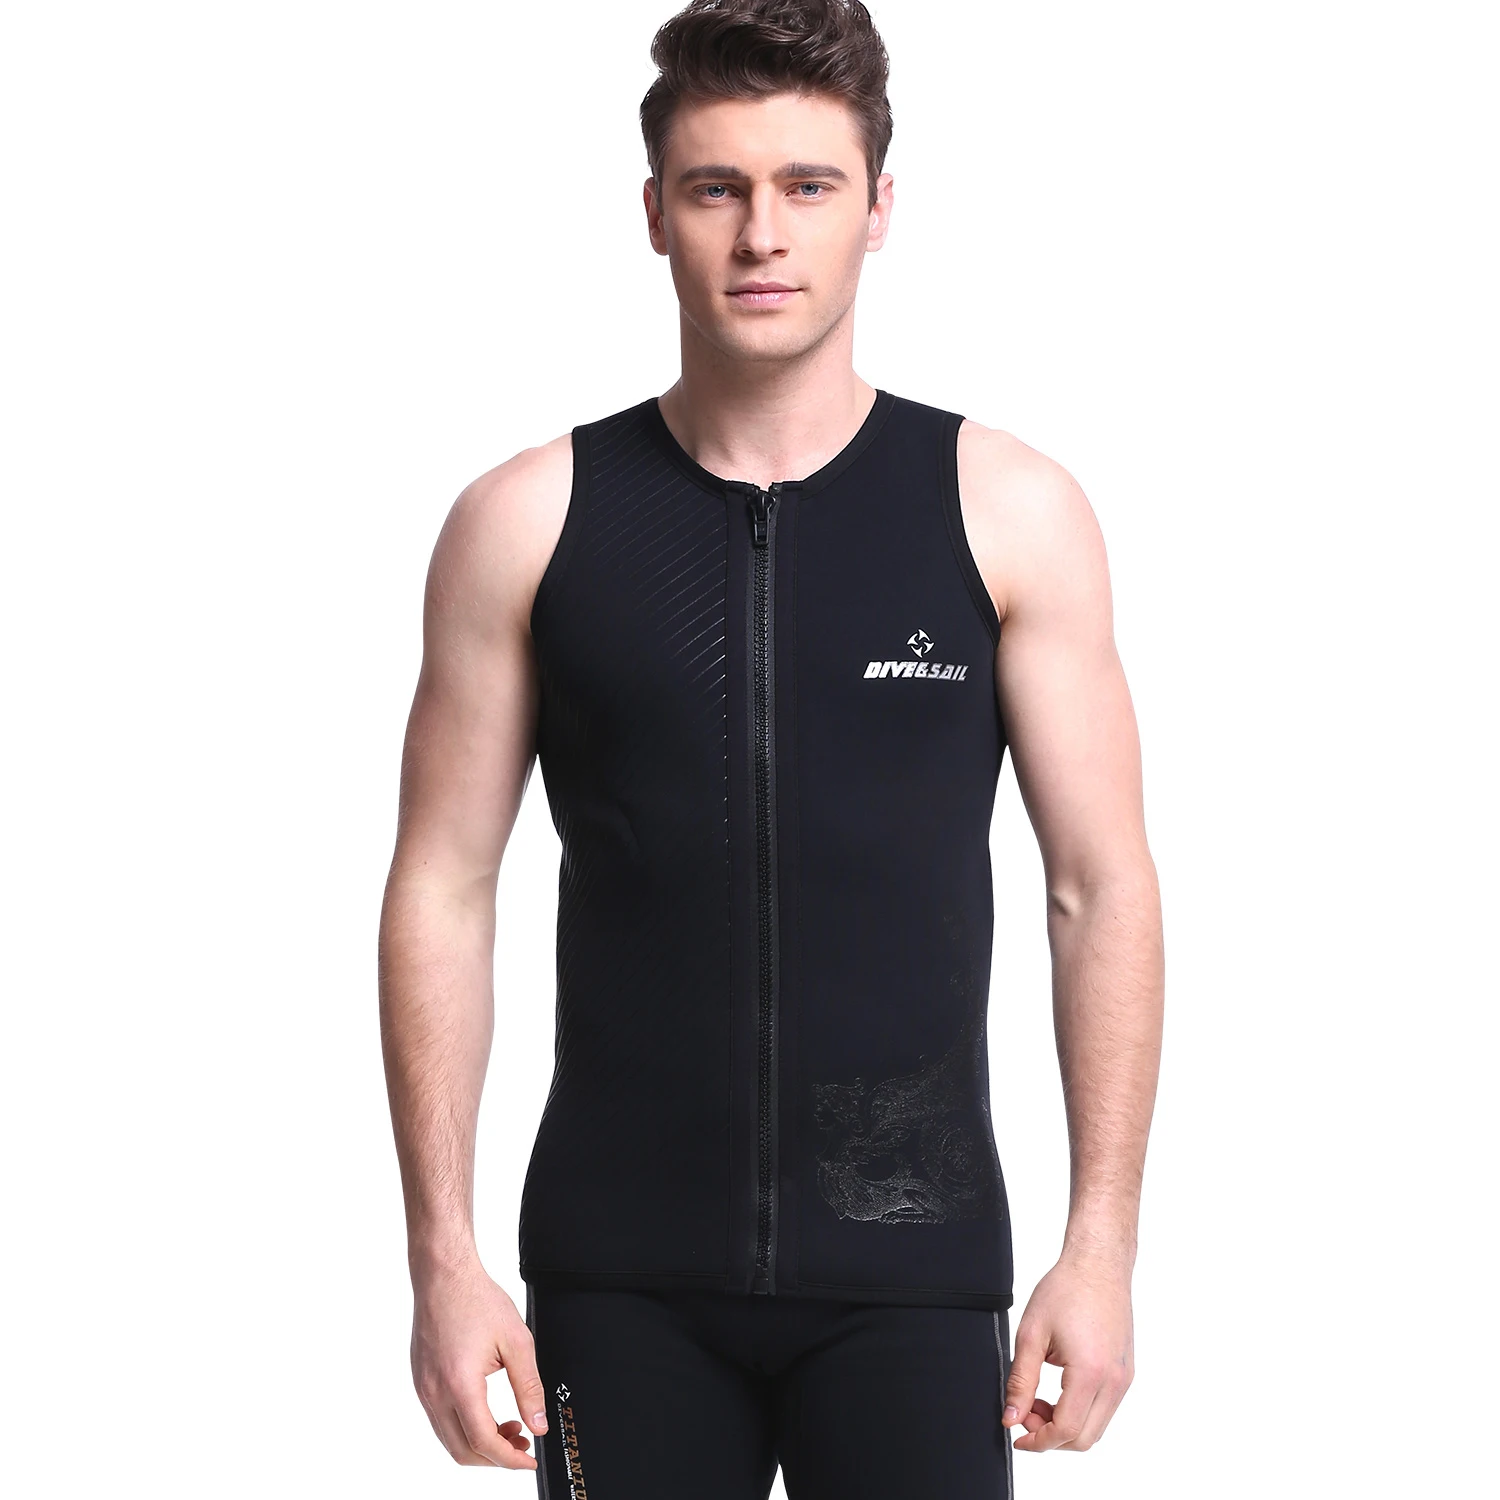 WoCoo-Wetsuit Men 3mm Neoprene Surfing Suit Sleeveless Diving Suit Vest Snorkeling Swimming Vest Zipper Thermal Wetsuits 